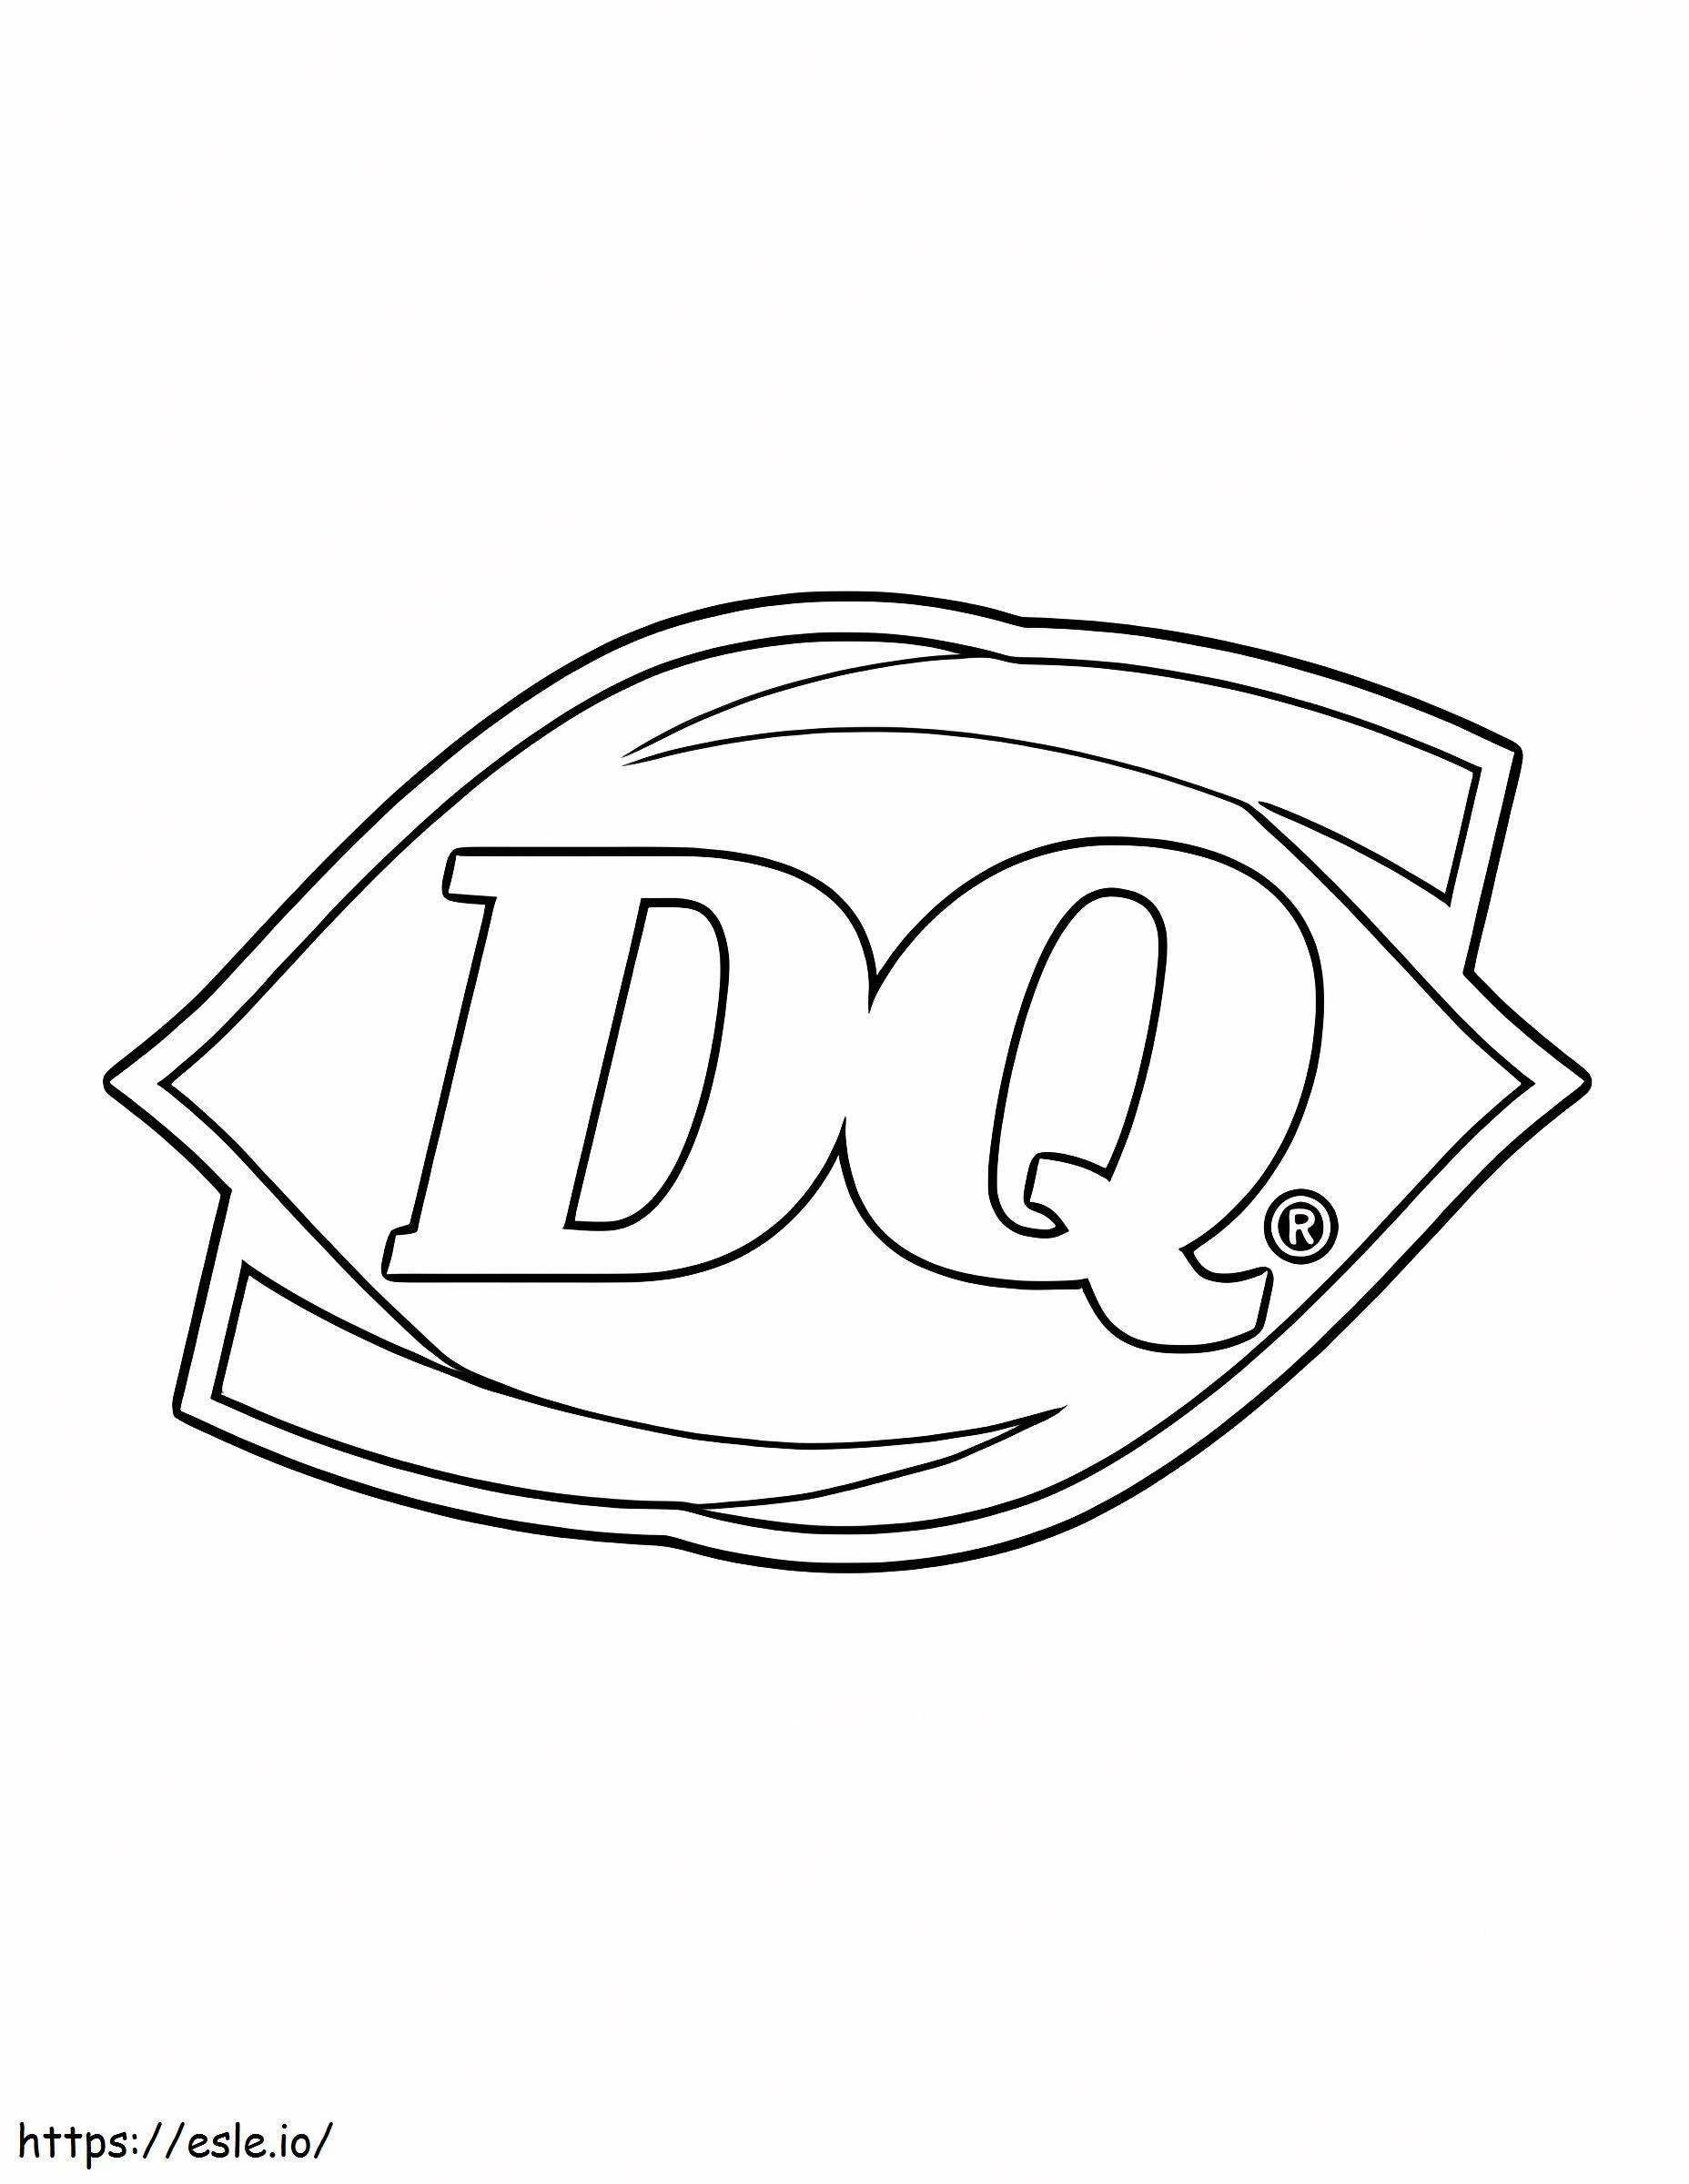 Logotipo DQ para colorear